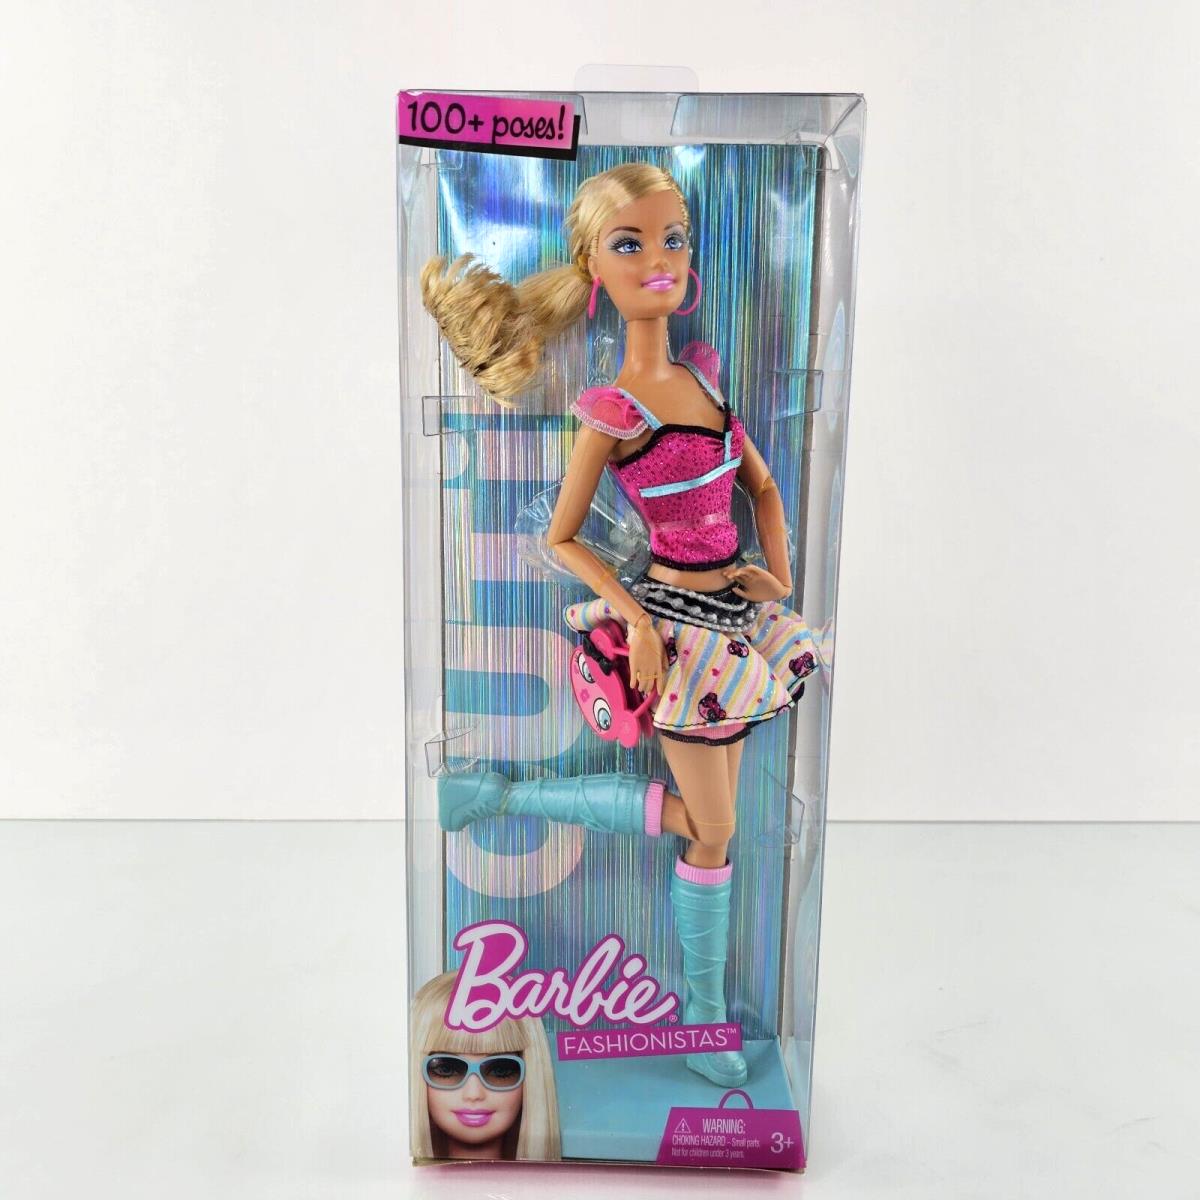 Barbie Fashionistas Cutie Doll R9879 100 Poses Music Video Mattel 2009